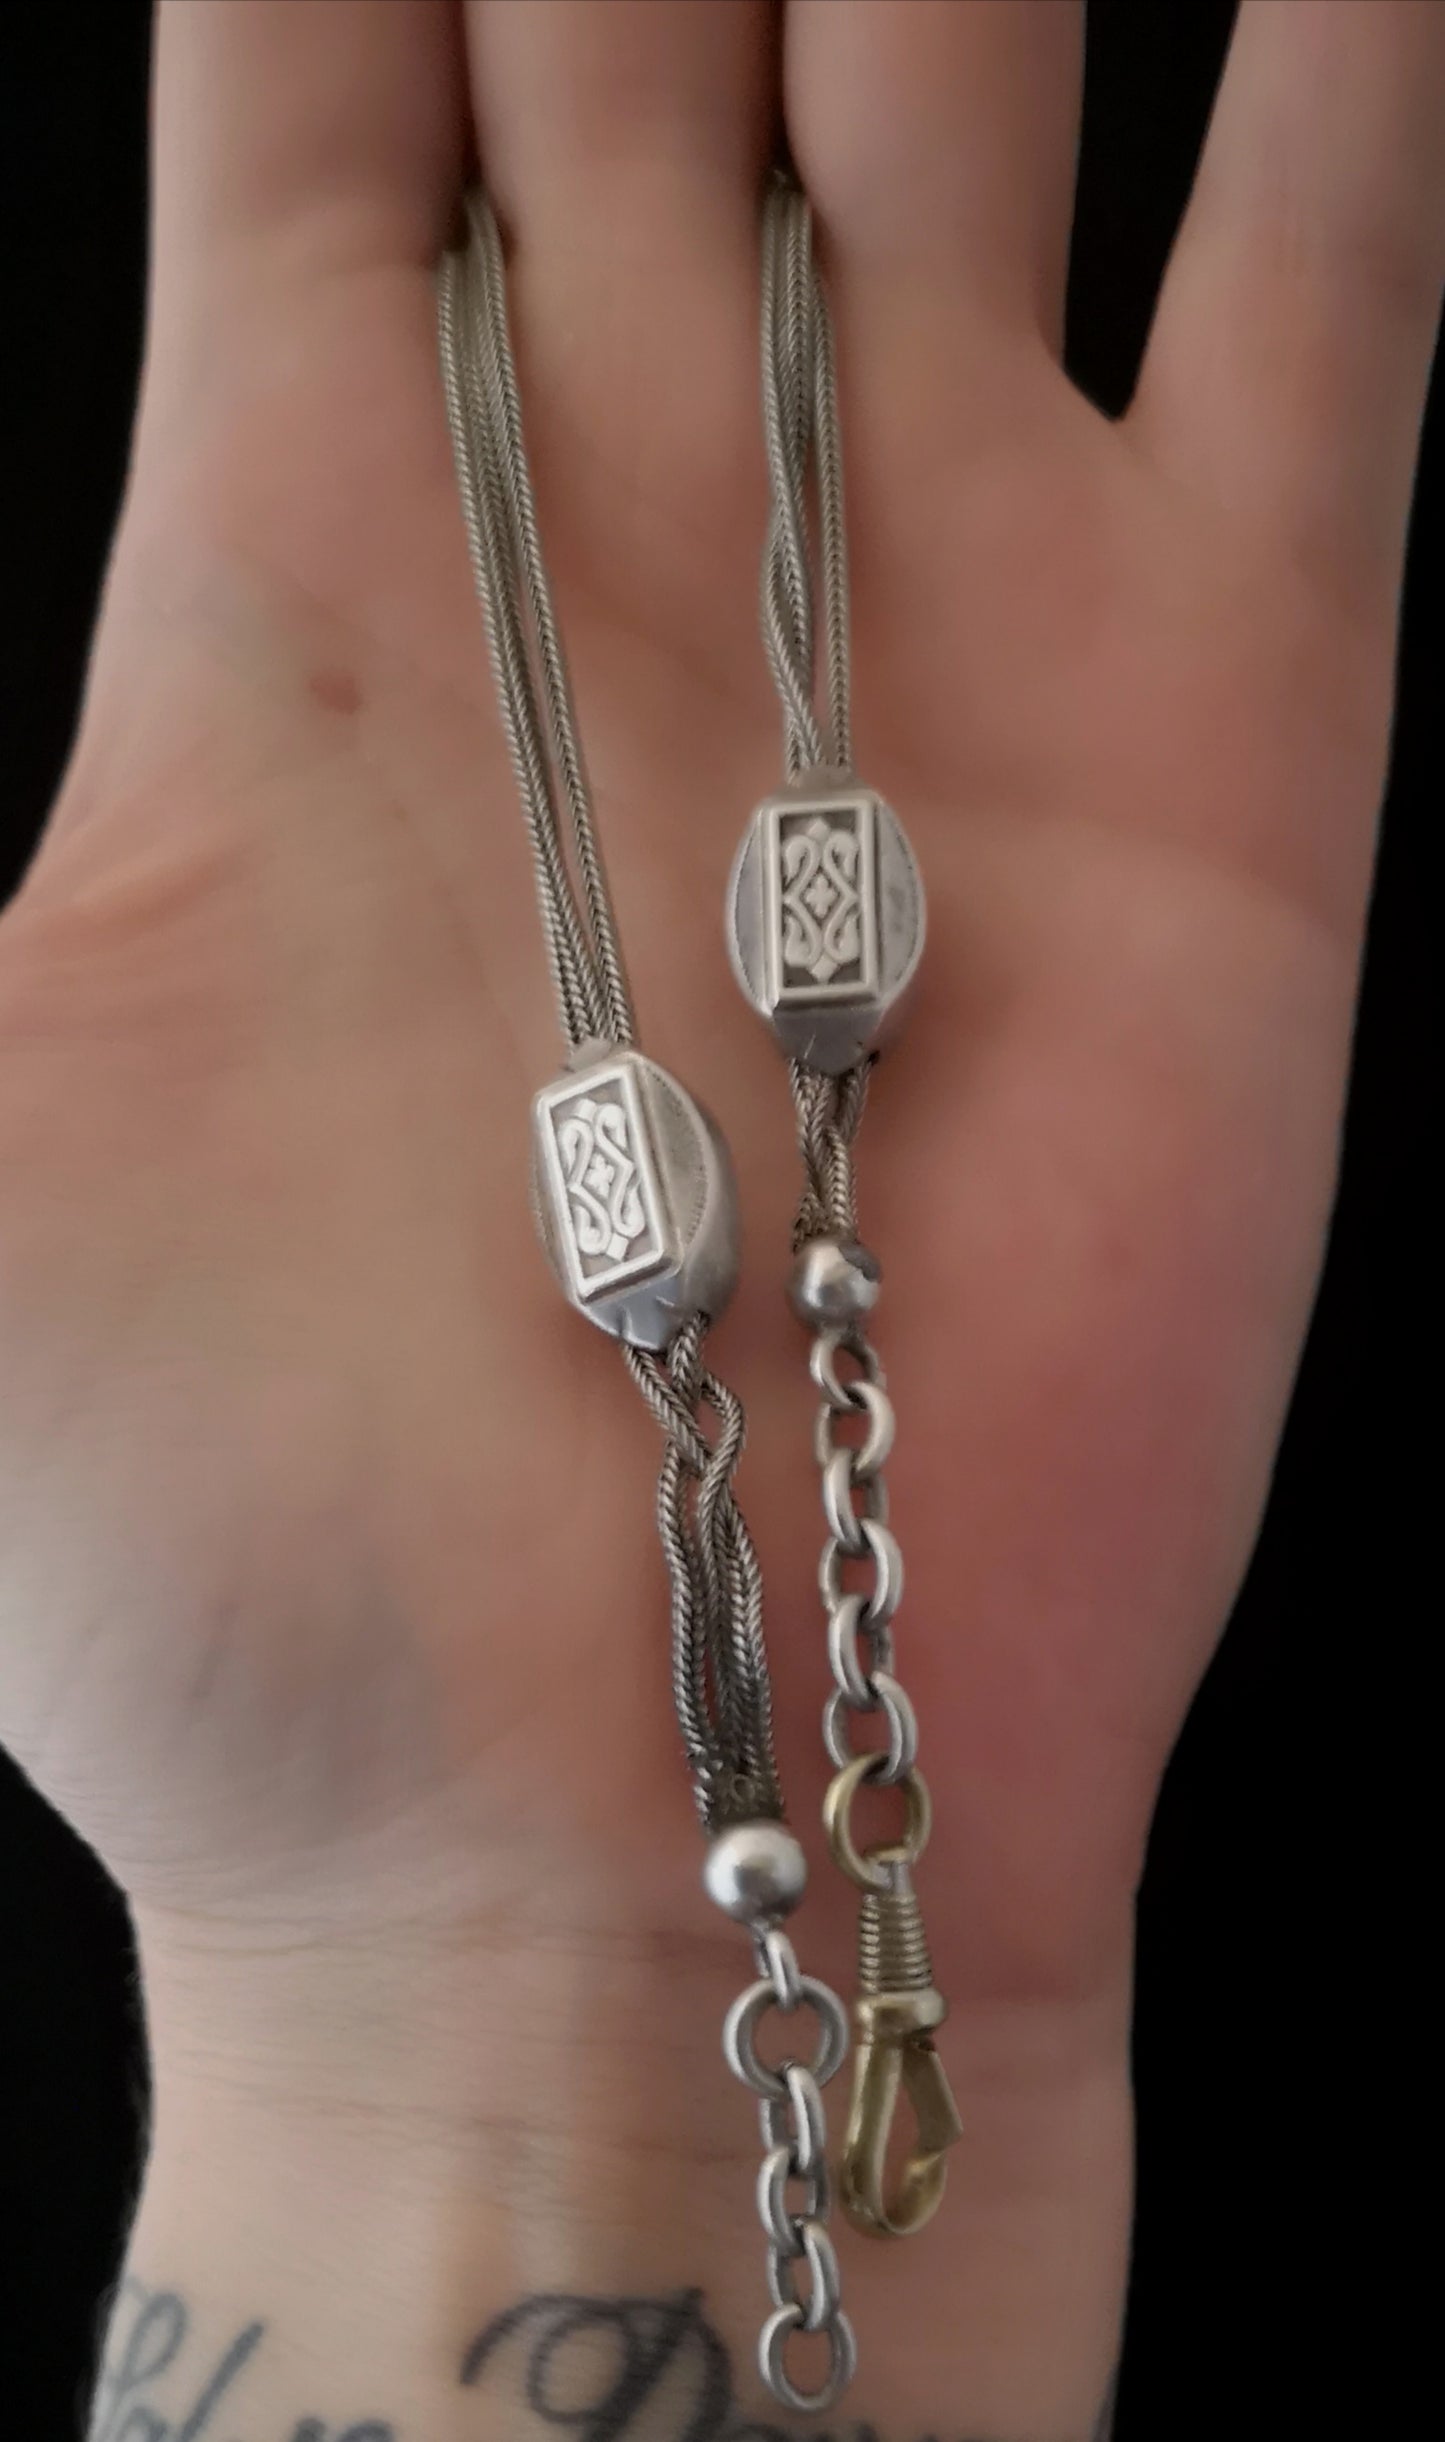 Antique silver albertina, watch chain